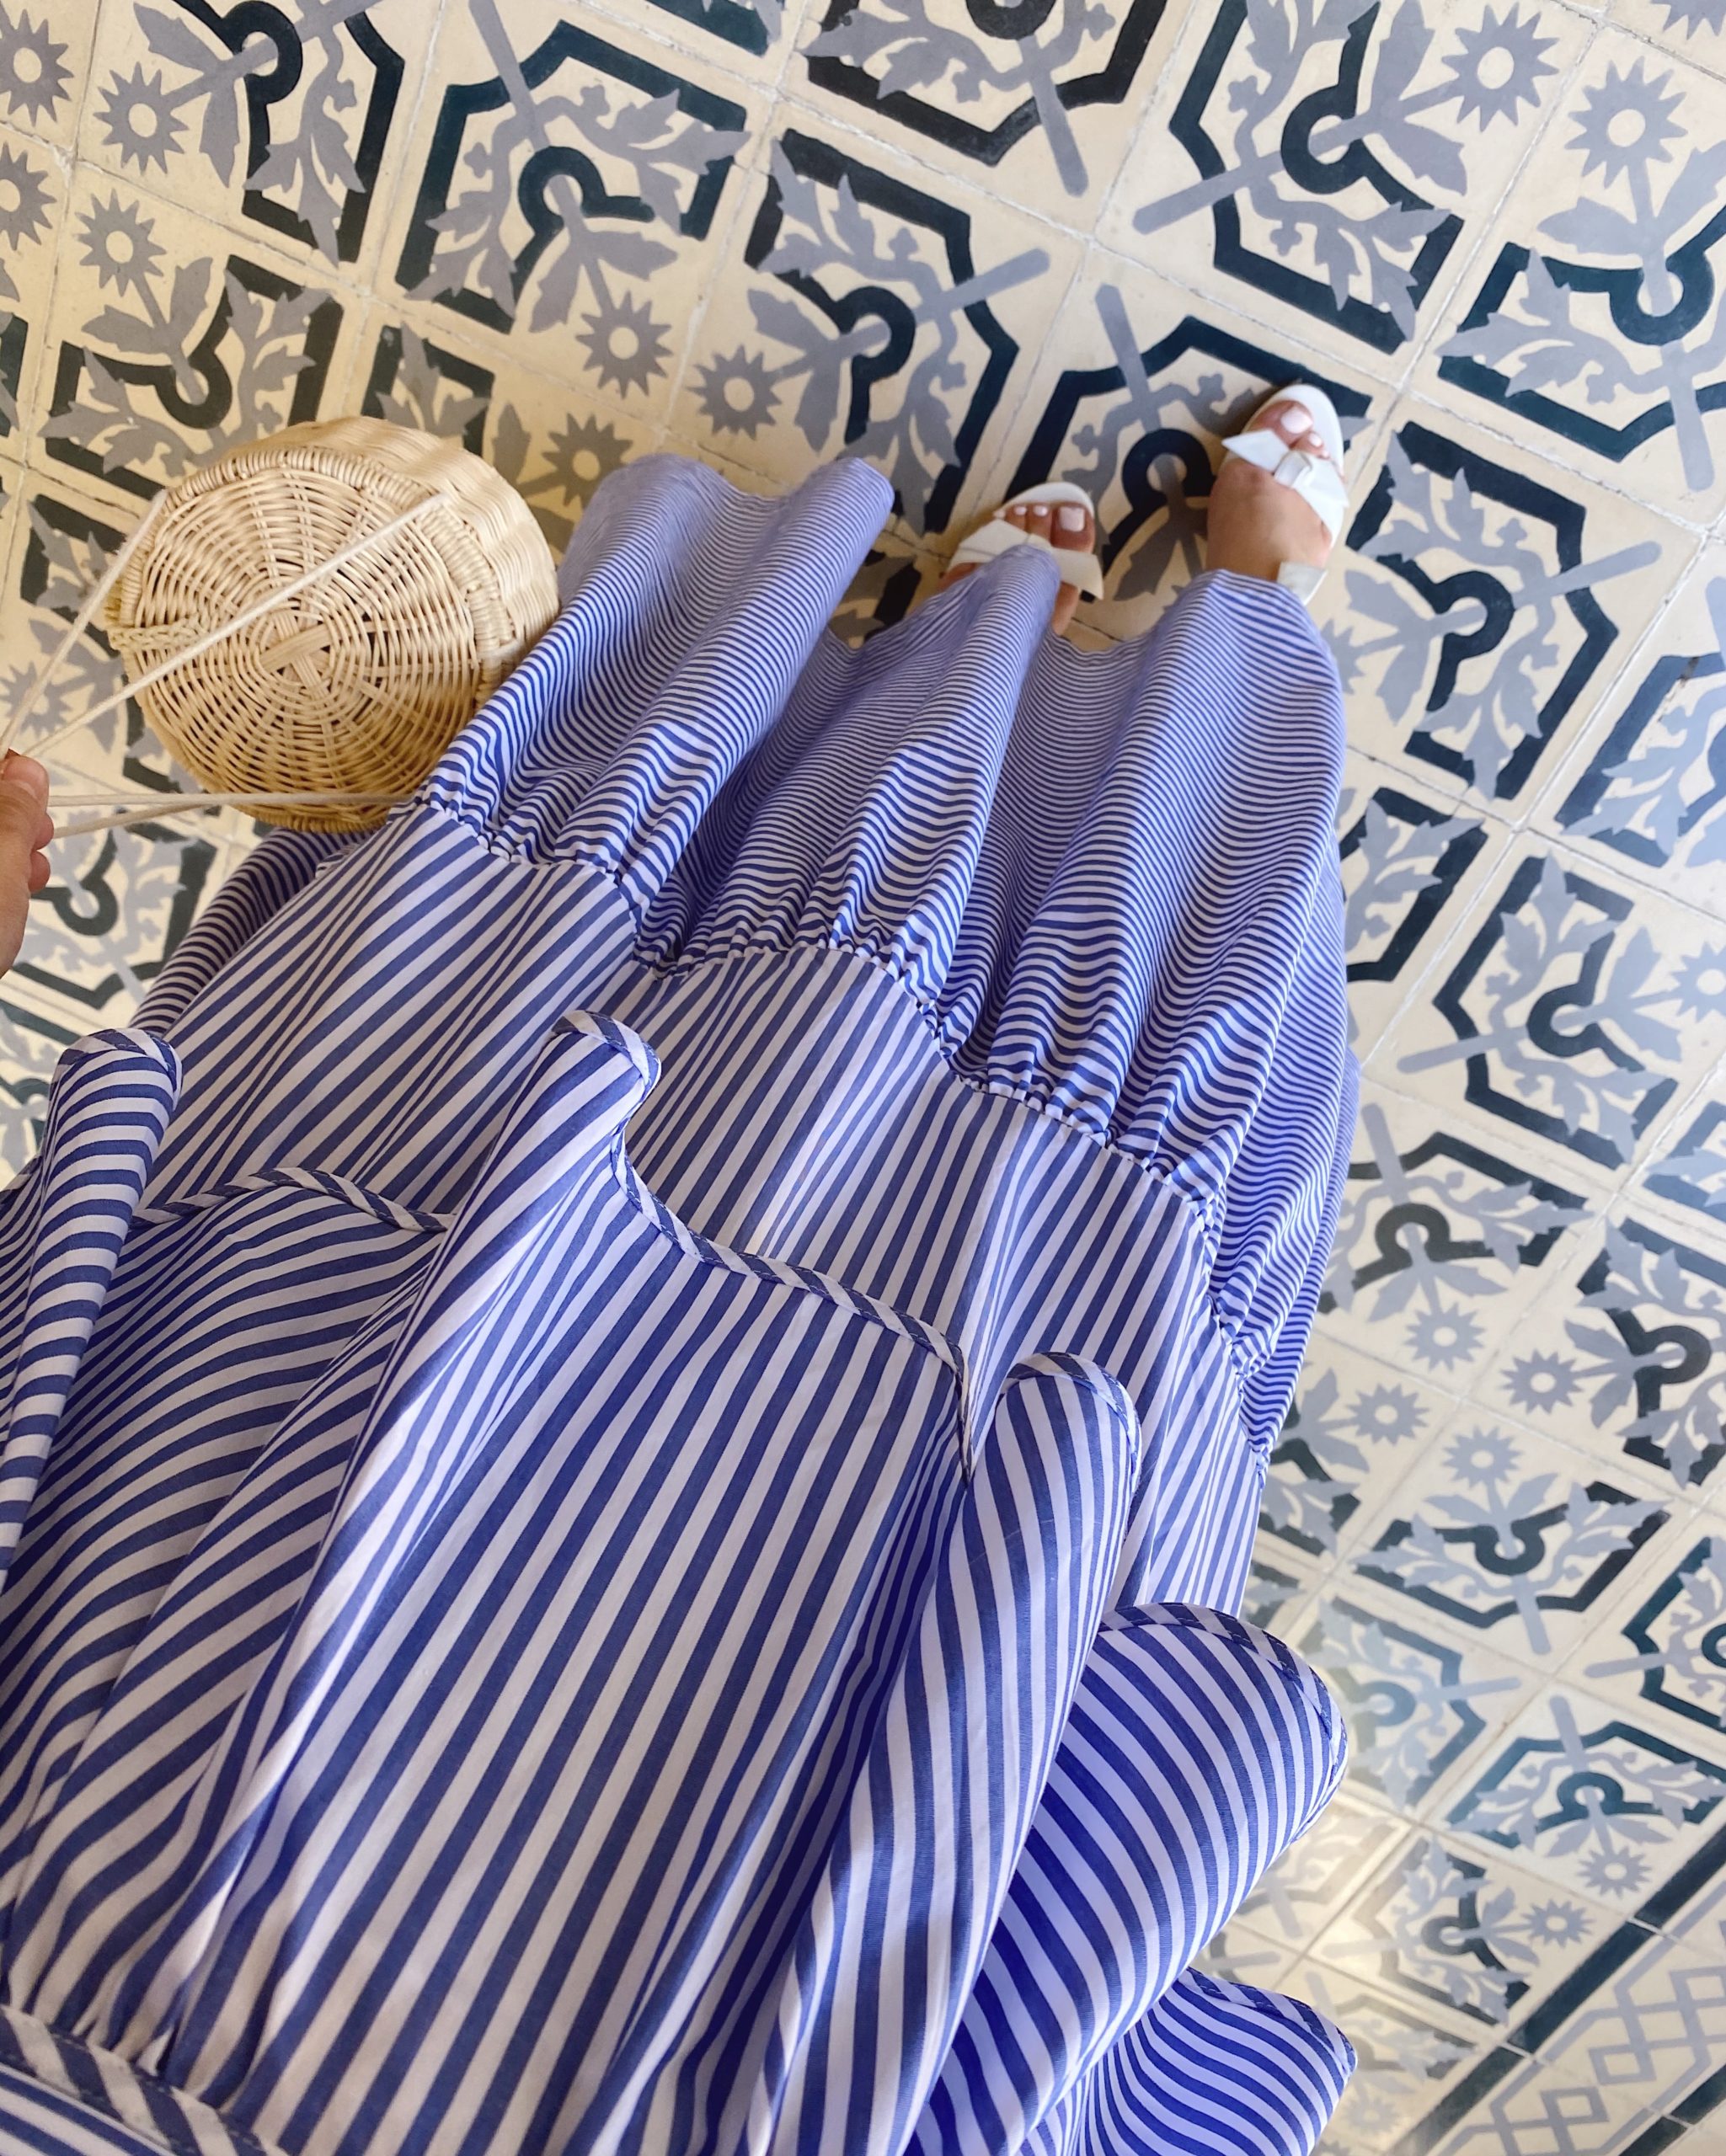 lo-murphy-staud-Luna-striped-cotton-poplin-peplum-top-staud-blue-orchid-skirt-blue-and-white-dress-stripes-dallas-blogger-straw-hat